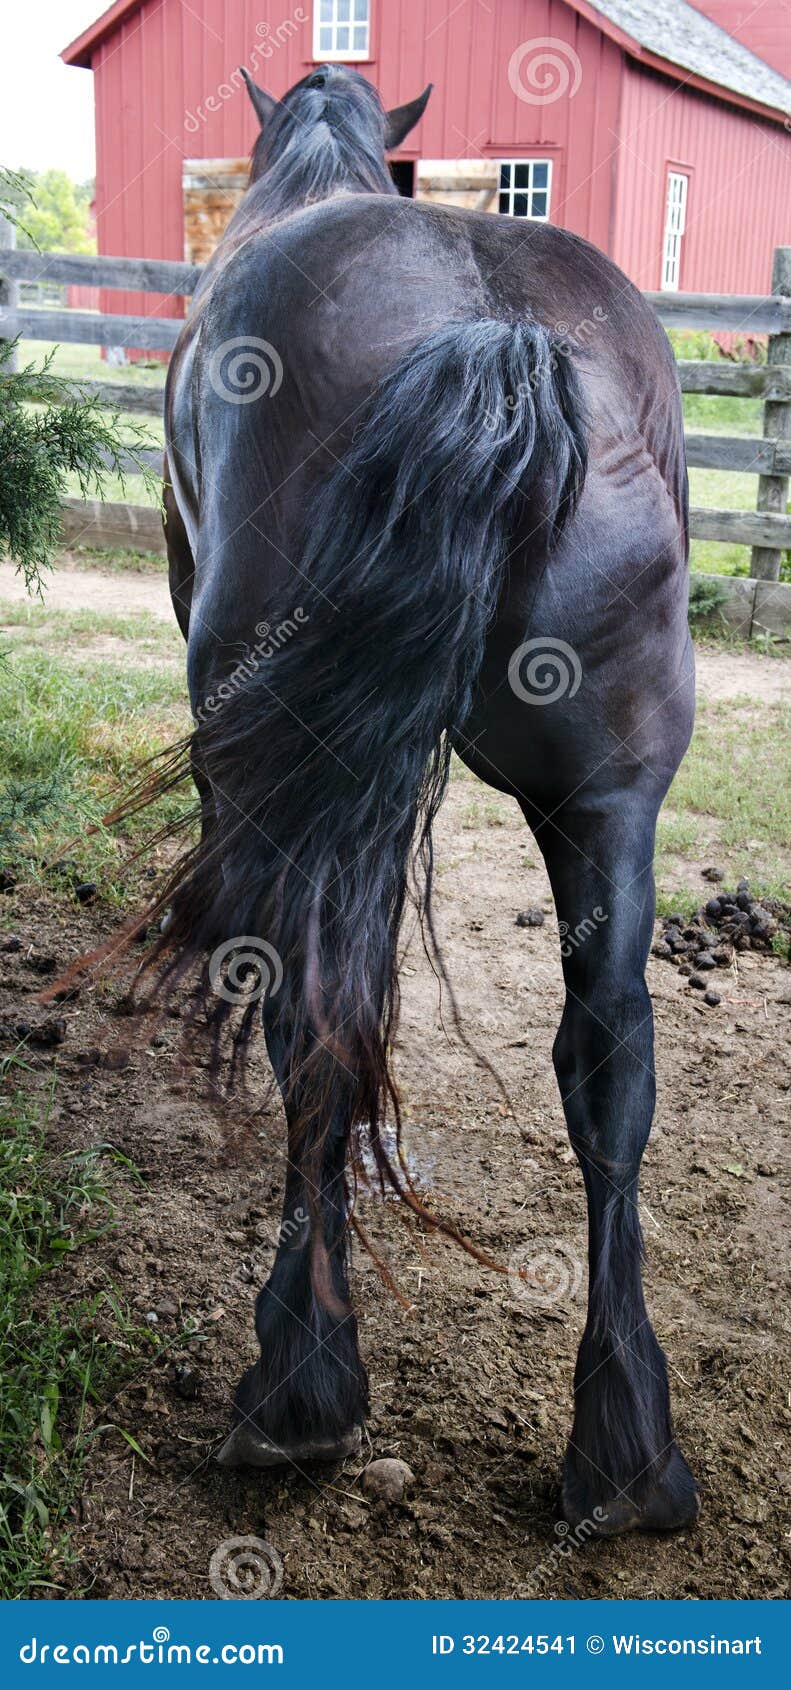 Female horse butt